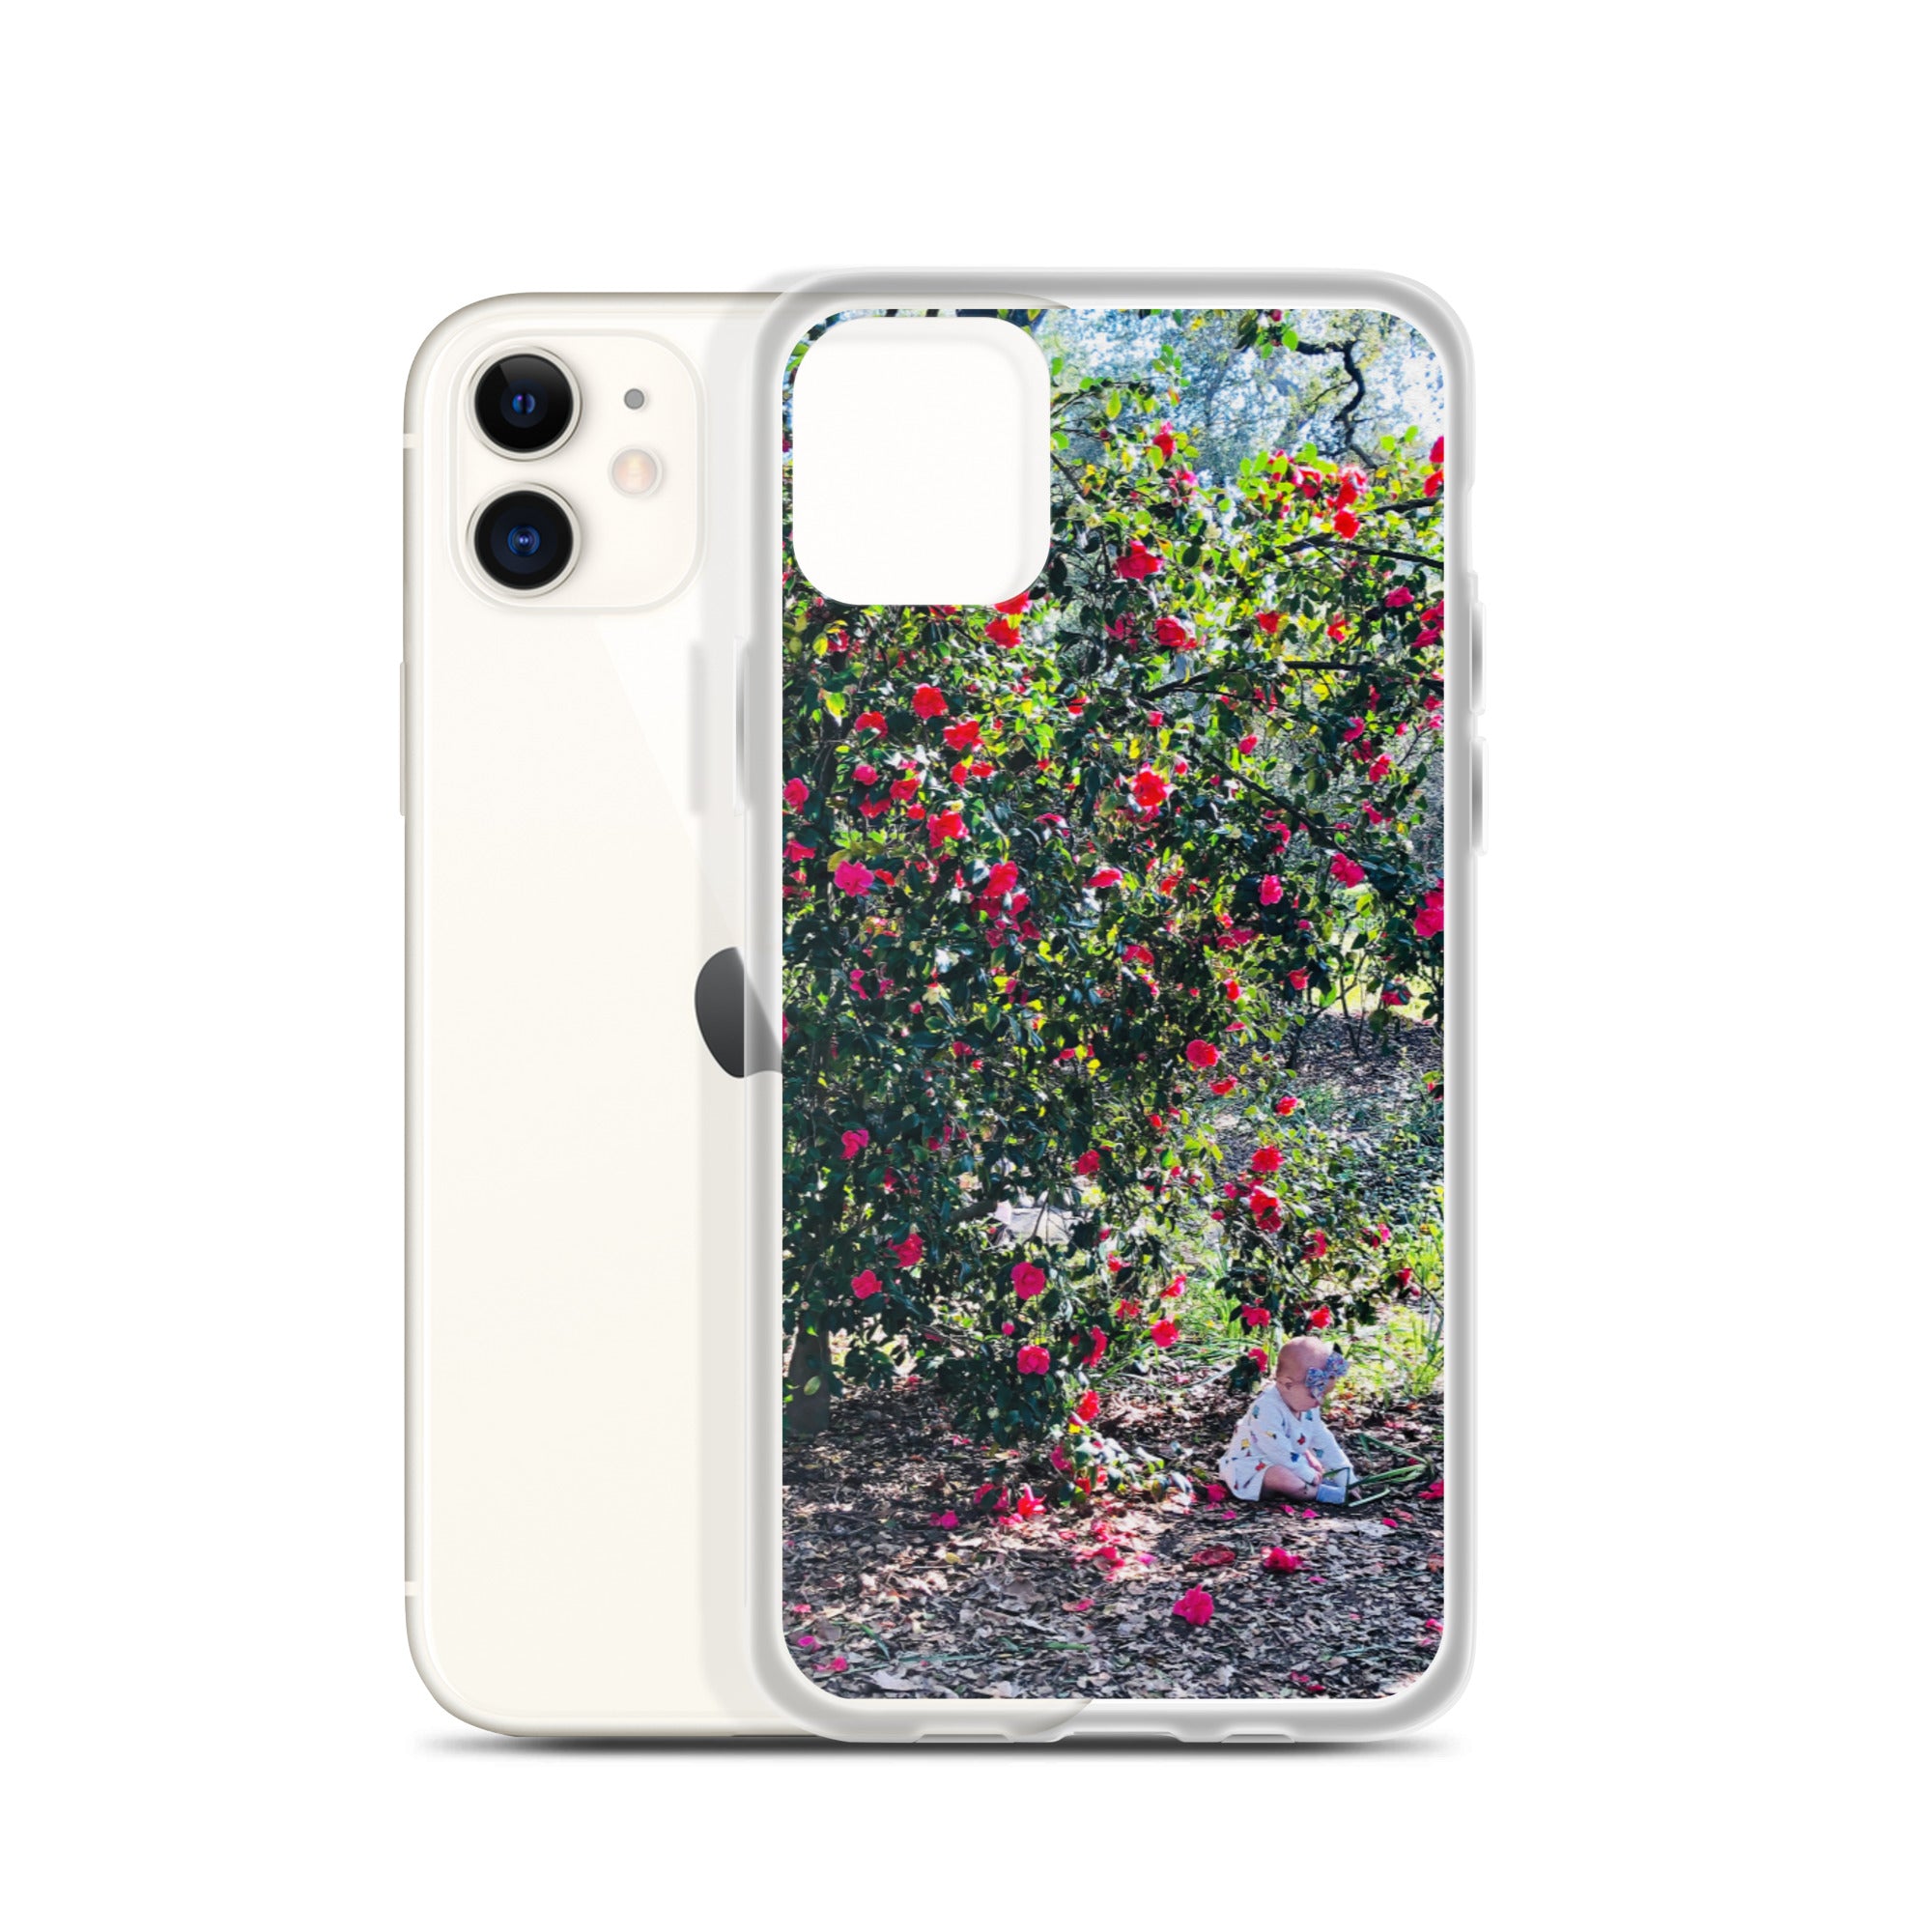 impression spring-iPhone Case